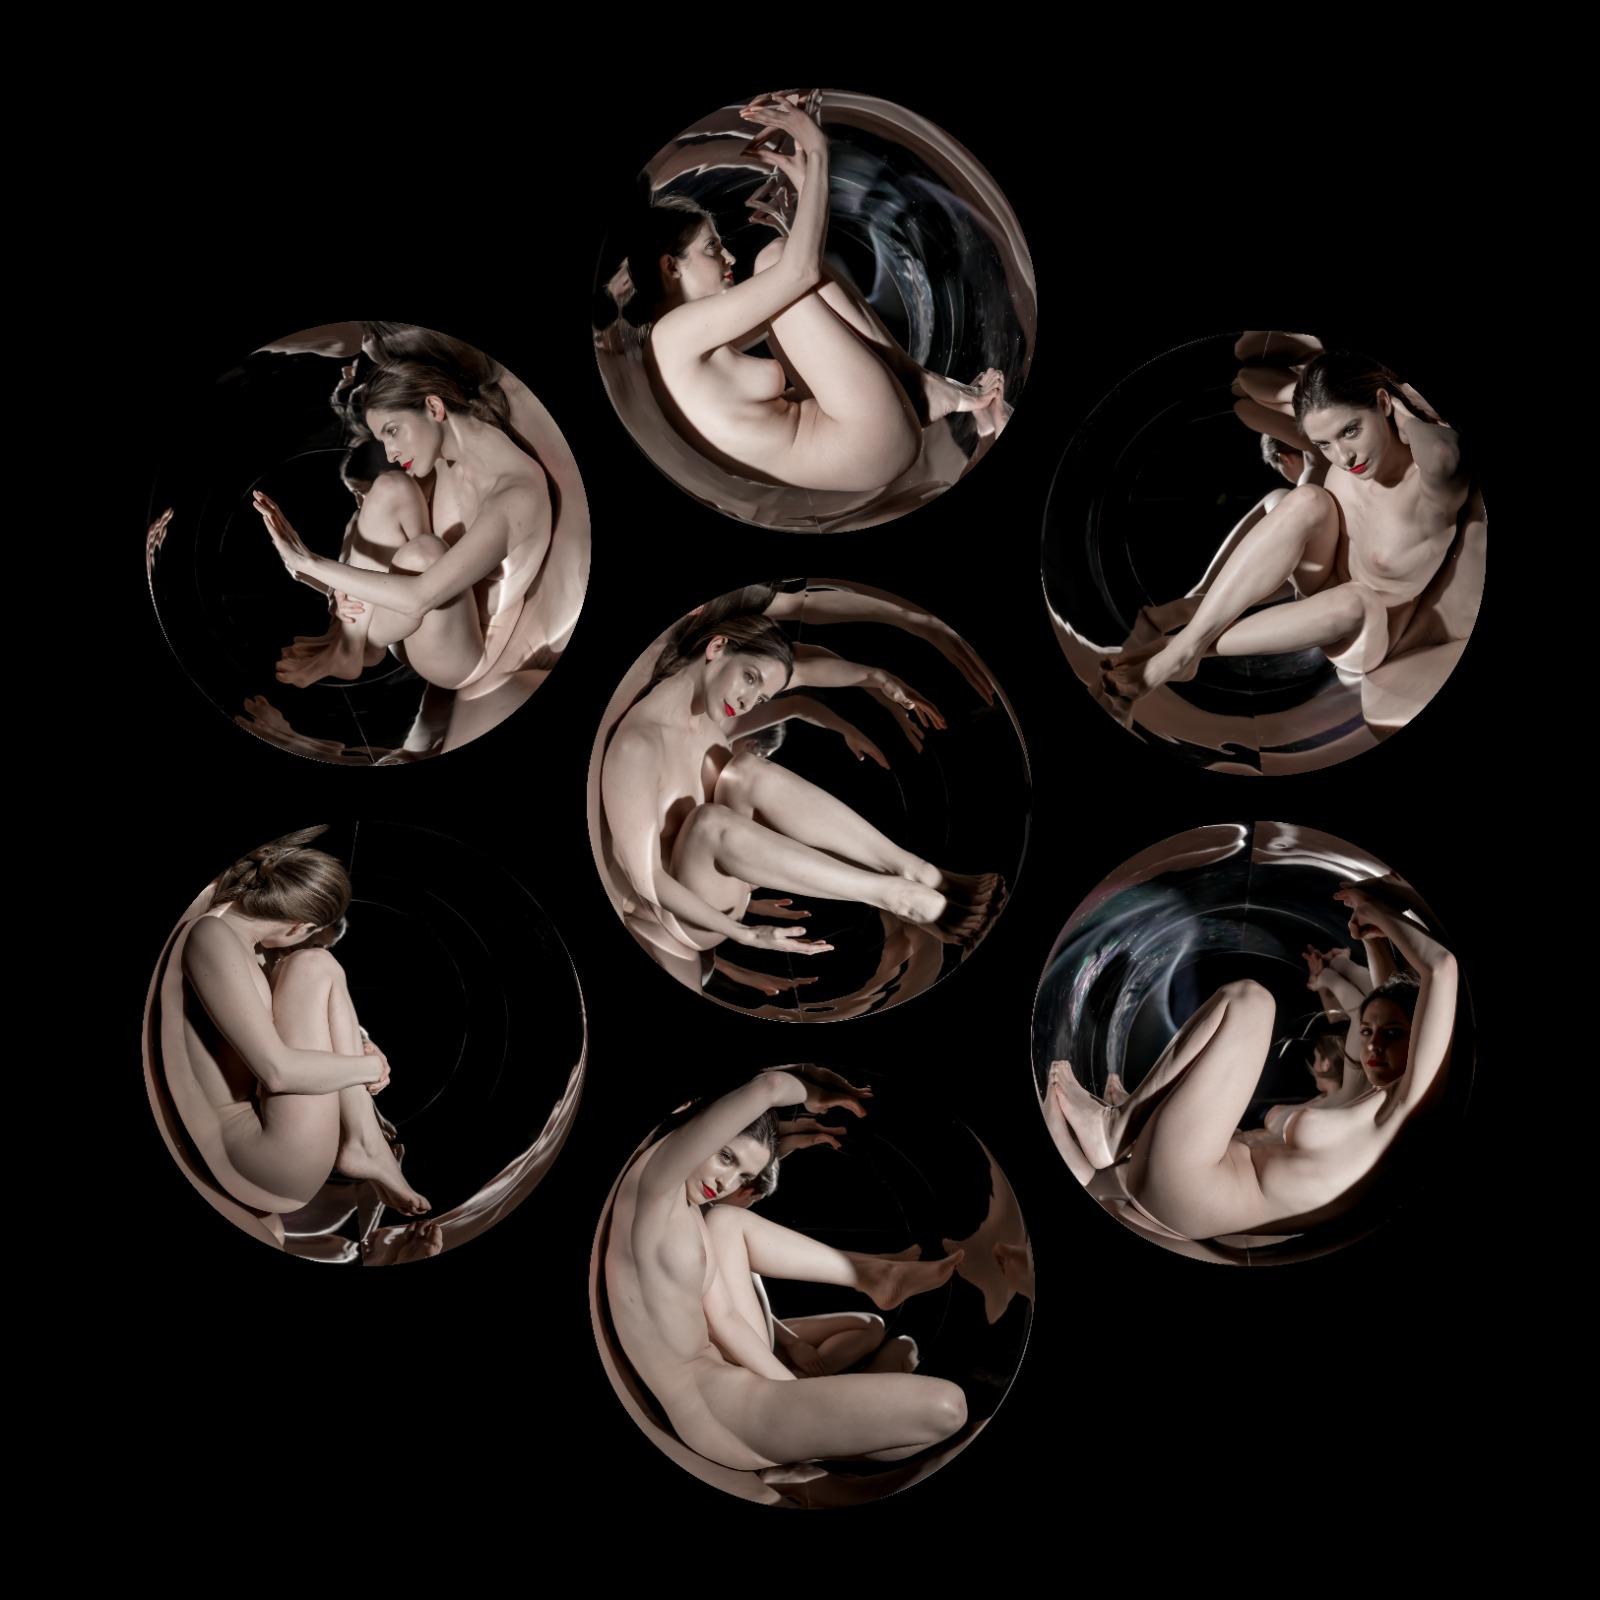 "Cir1" 3-D Lenticular Black & White figurative nude photo framed, contemporary